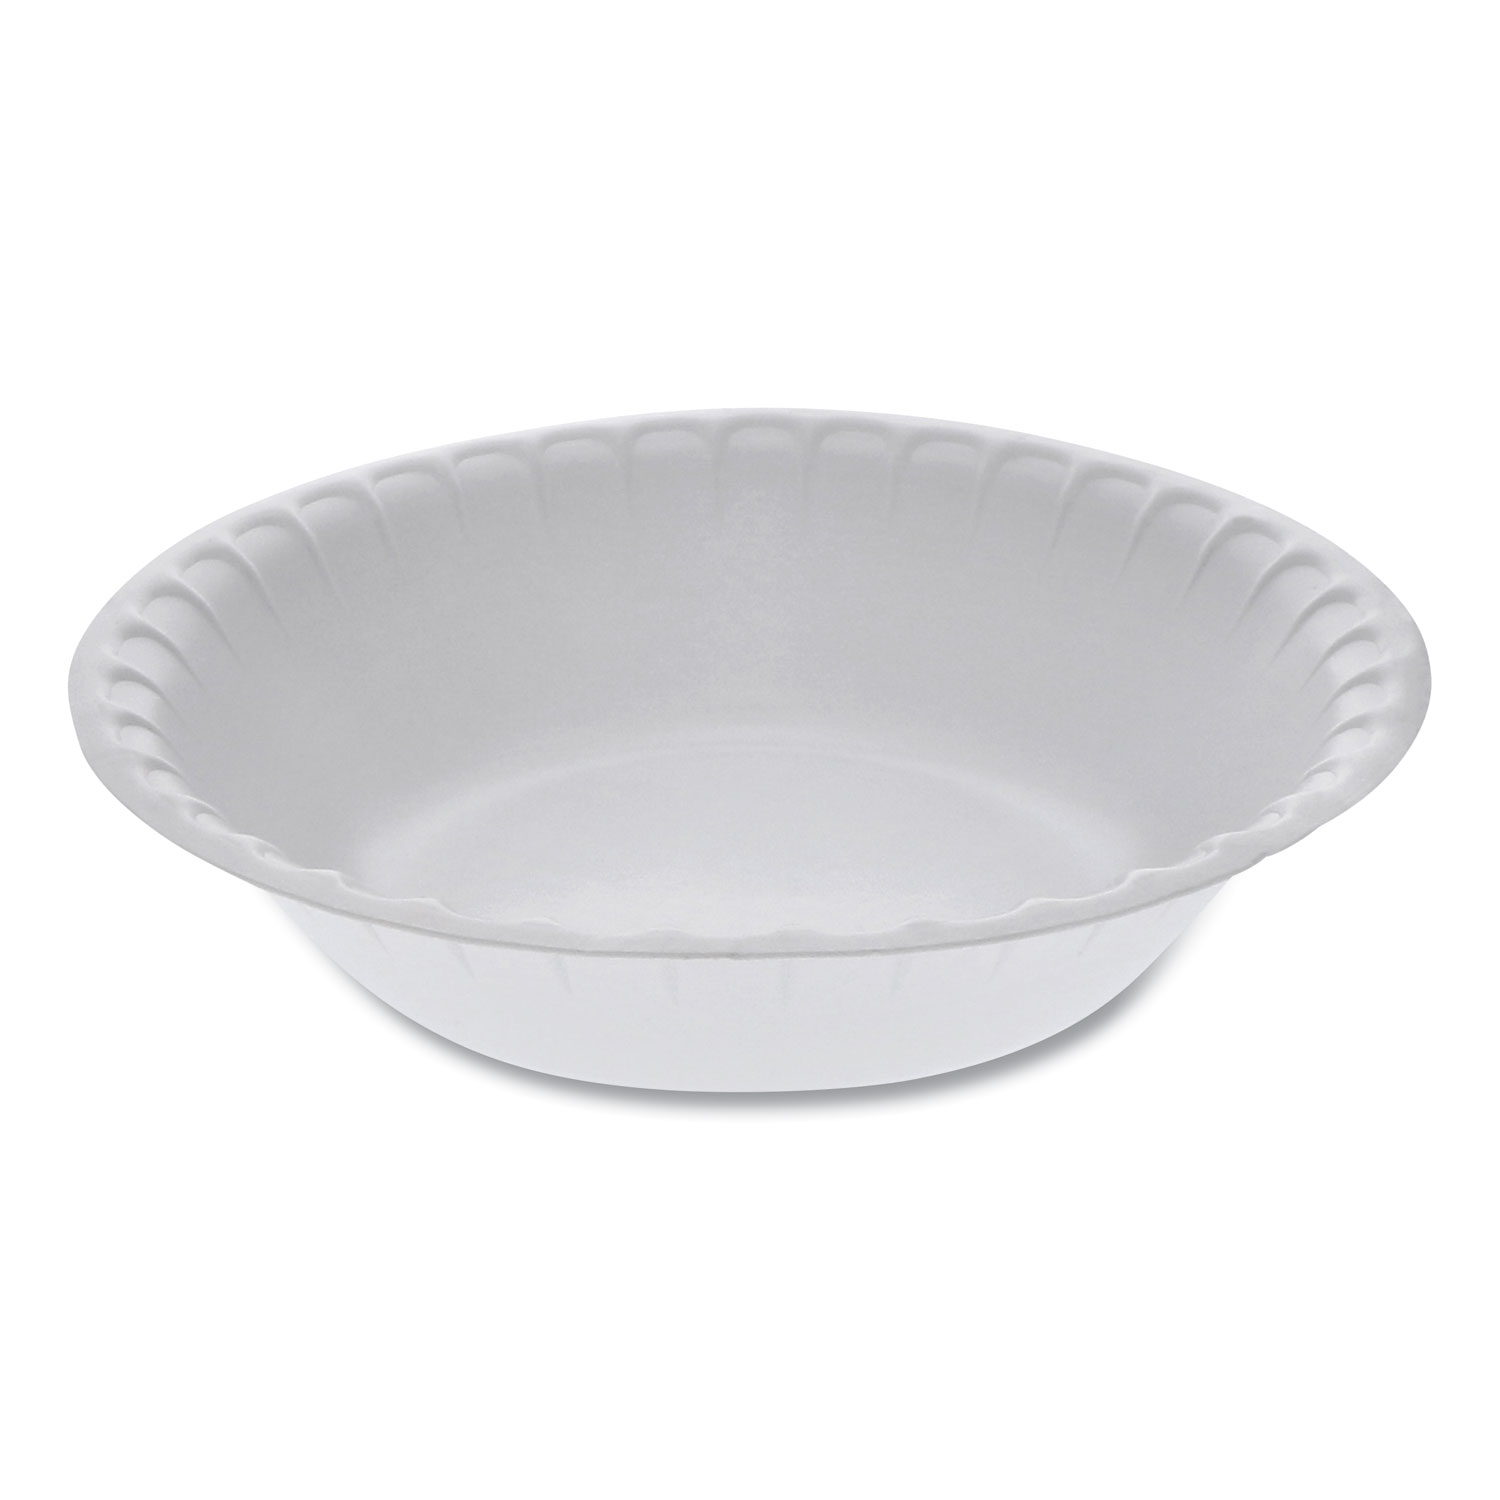 Pactiv Unlaminated Foam Dinnerware, Bowl, 30 oz, 5 Diameter, White, 450/Carton